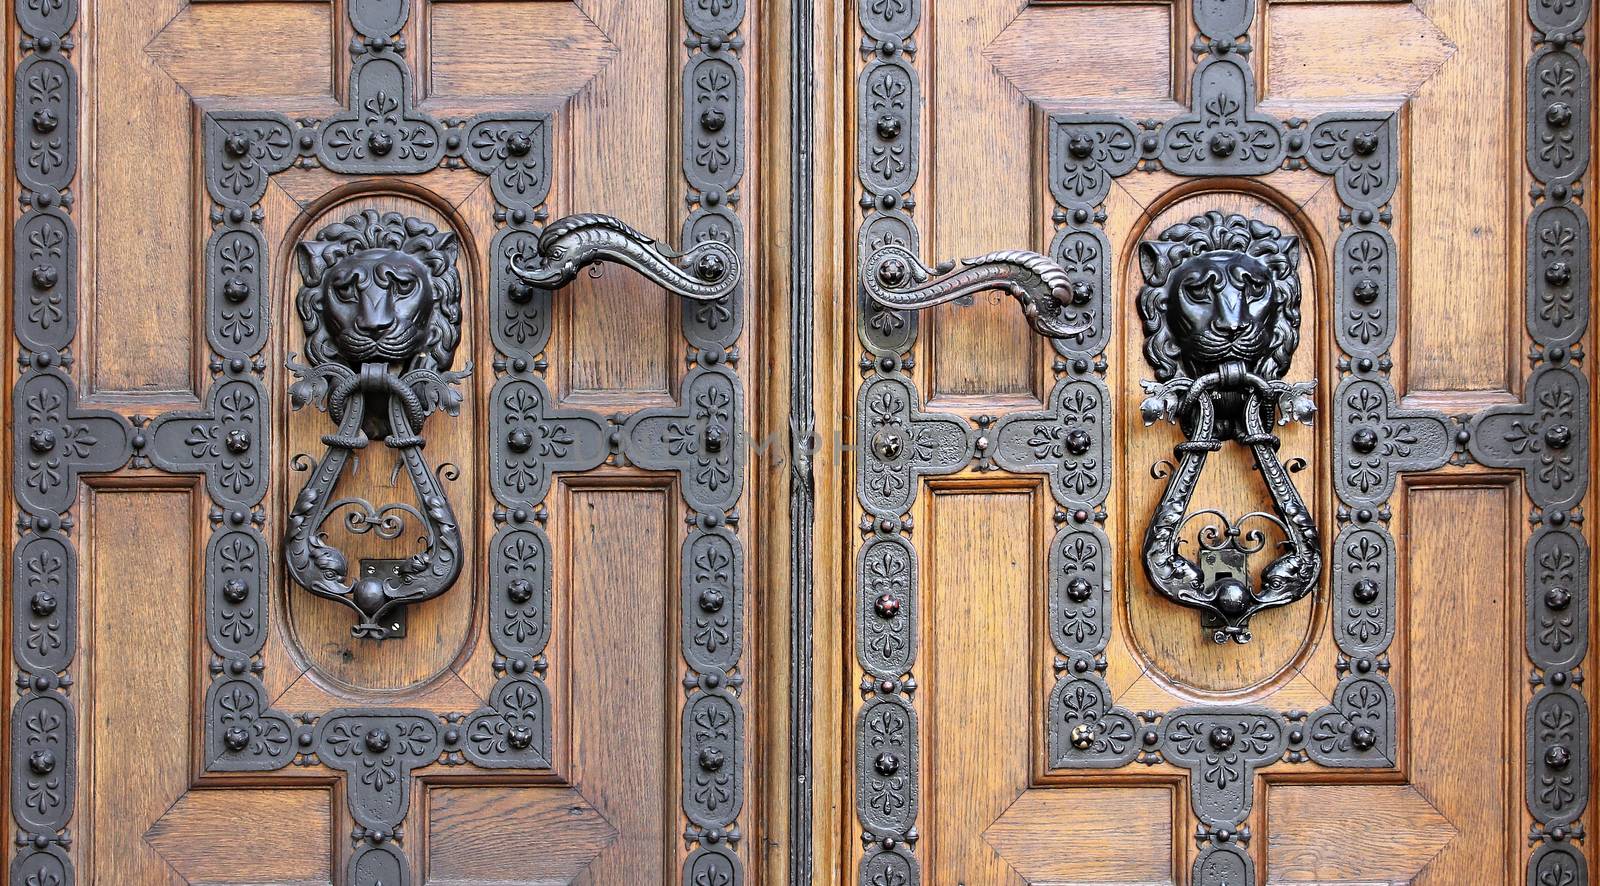 Antique ornaments lion head door knocker